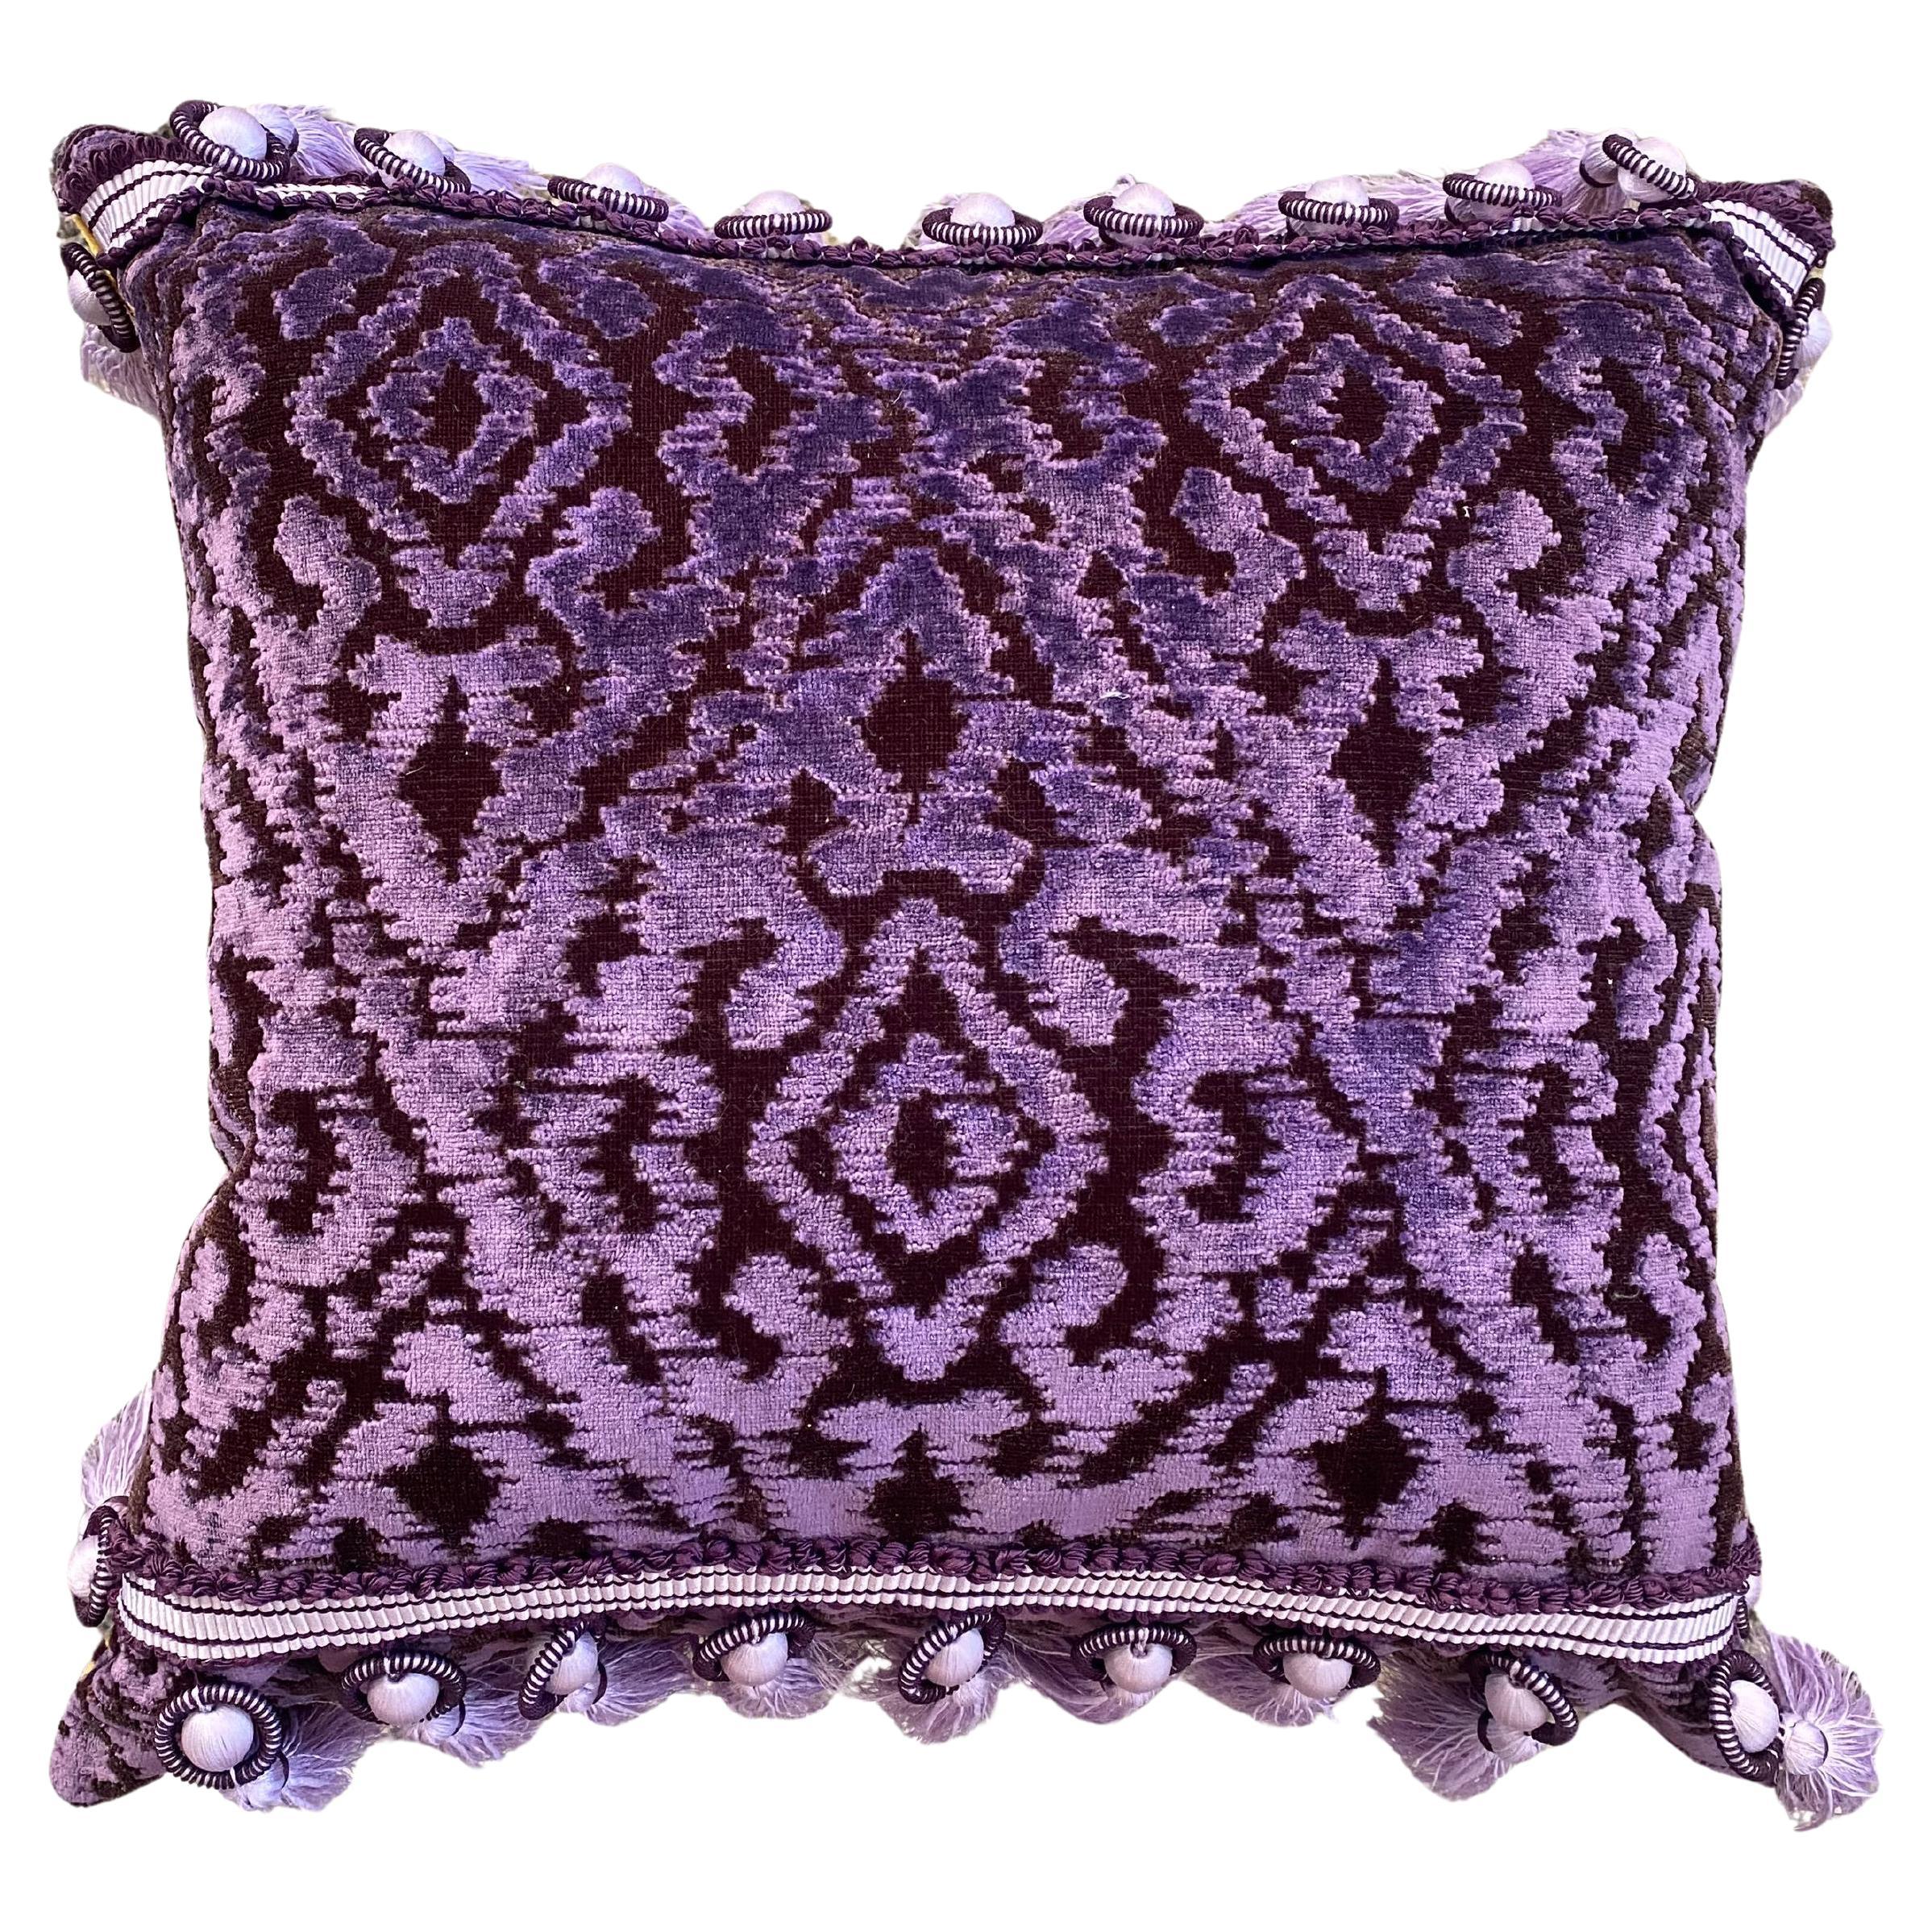 Purple Passion Pillow #B